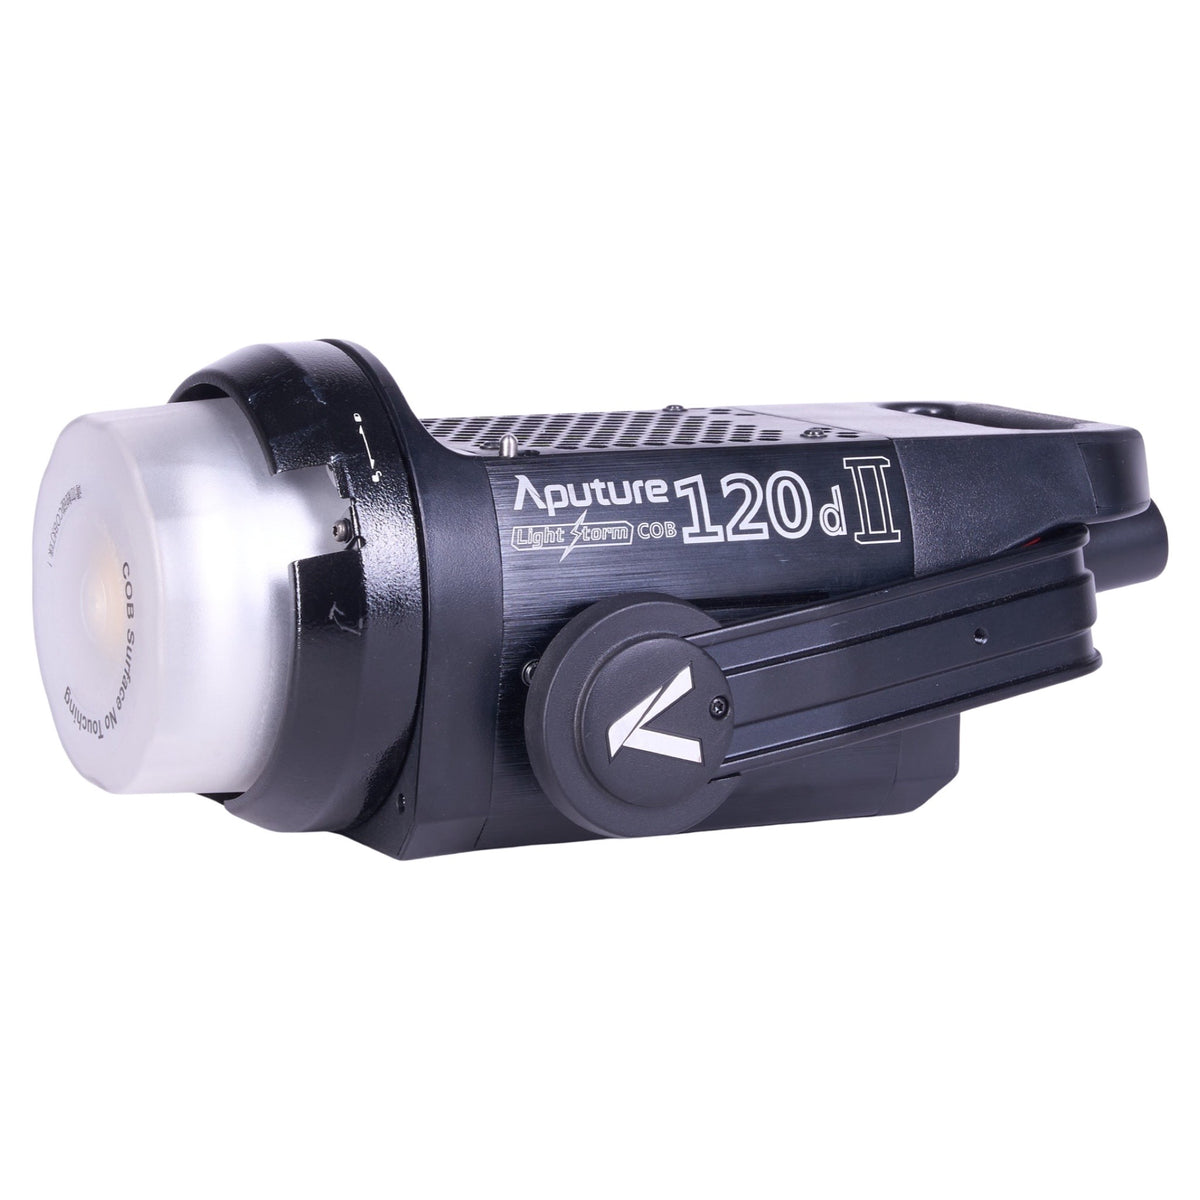 ACC3542 Aputure Light Storm LS C120D II LED Light Kit with V-Mount Battery Plate_5781.JPG